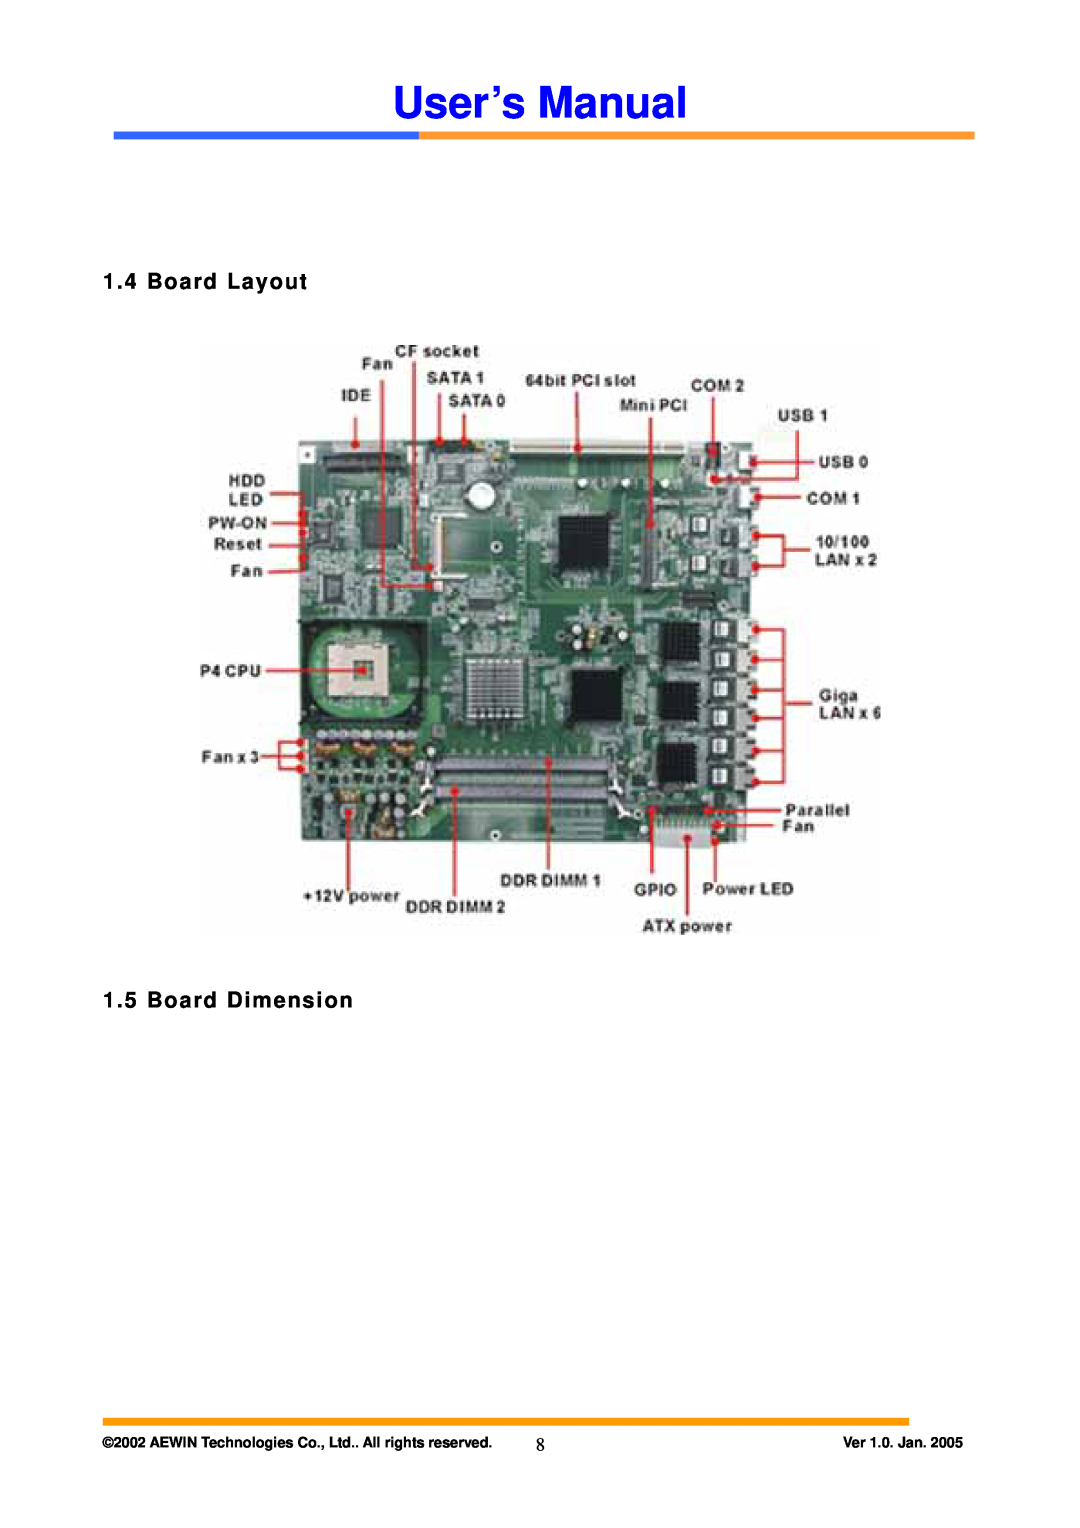 Intel AW-A795 user manual Board Layout 1.5 Board Dimension, User’s Manual, Ver 1.0. Jan 